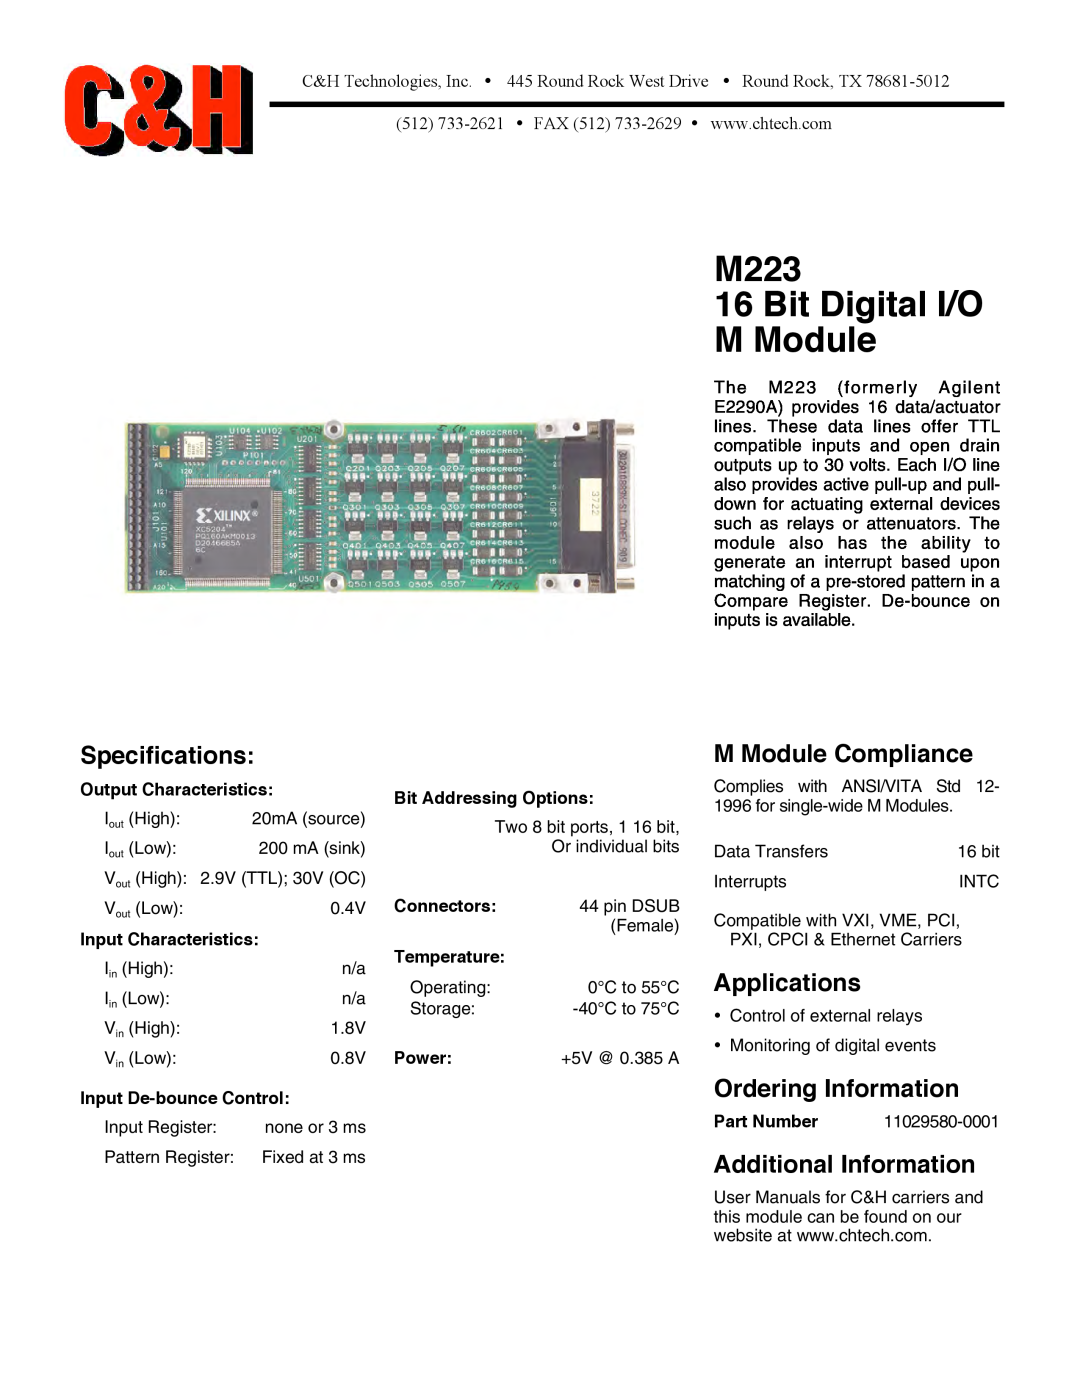 CH Tech specifications M223 16 Bit Digital I/O M Module, Specifications, M Module Compliance, Applications, Connectors 